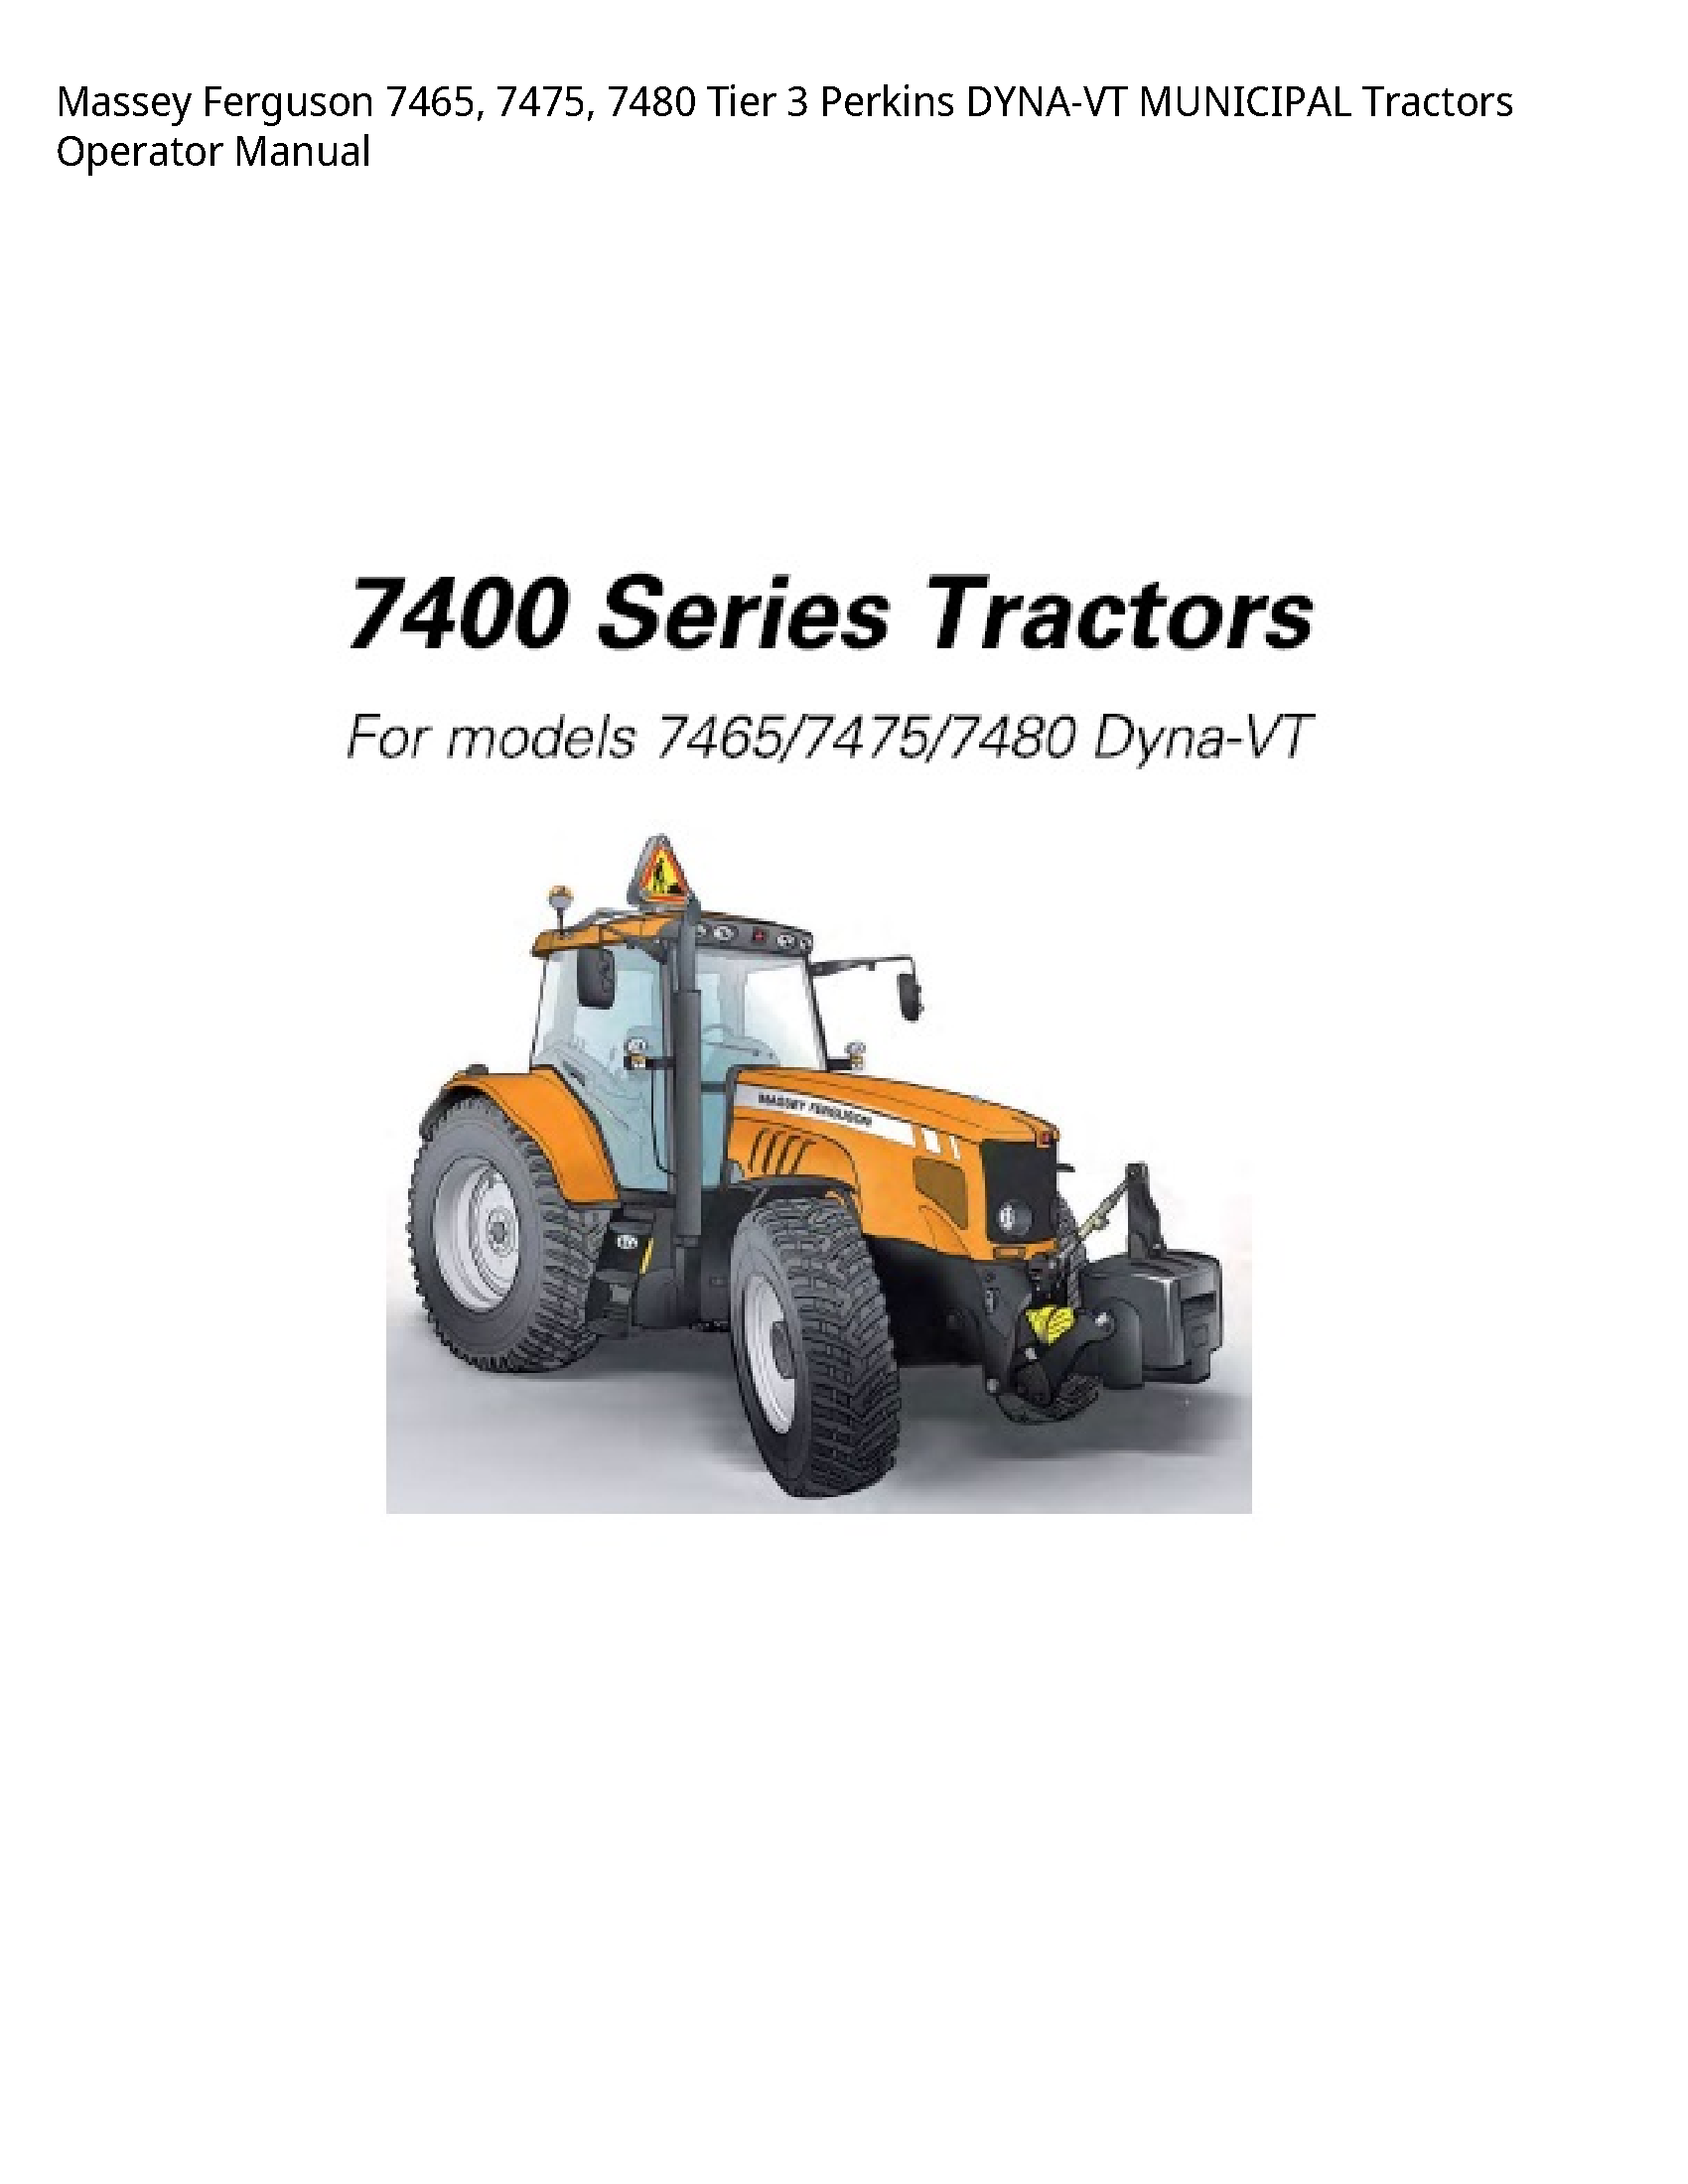 Massey Ferguson 7465 Tier Perkins DYNA-VT MUNICIPAL Tractors Operator manual